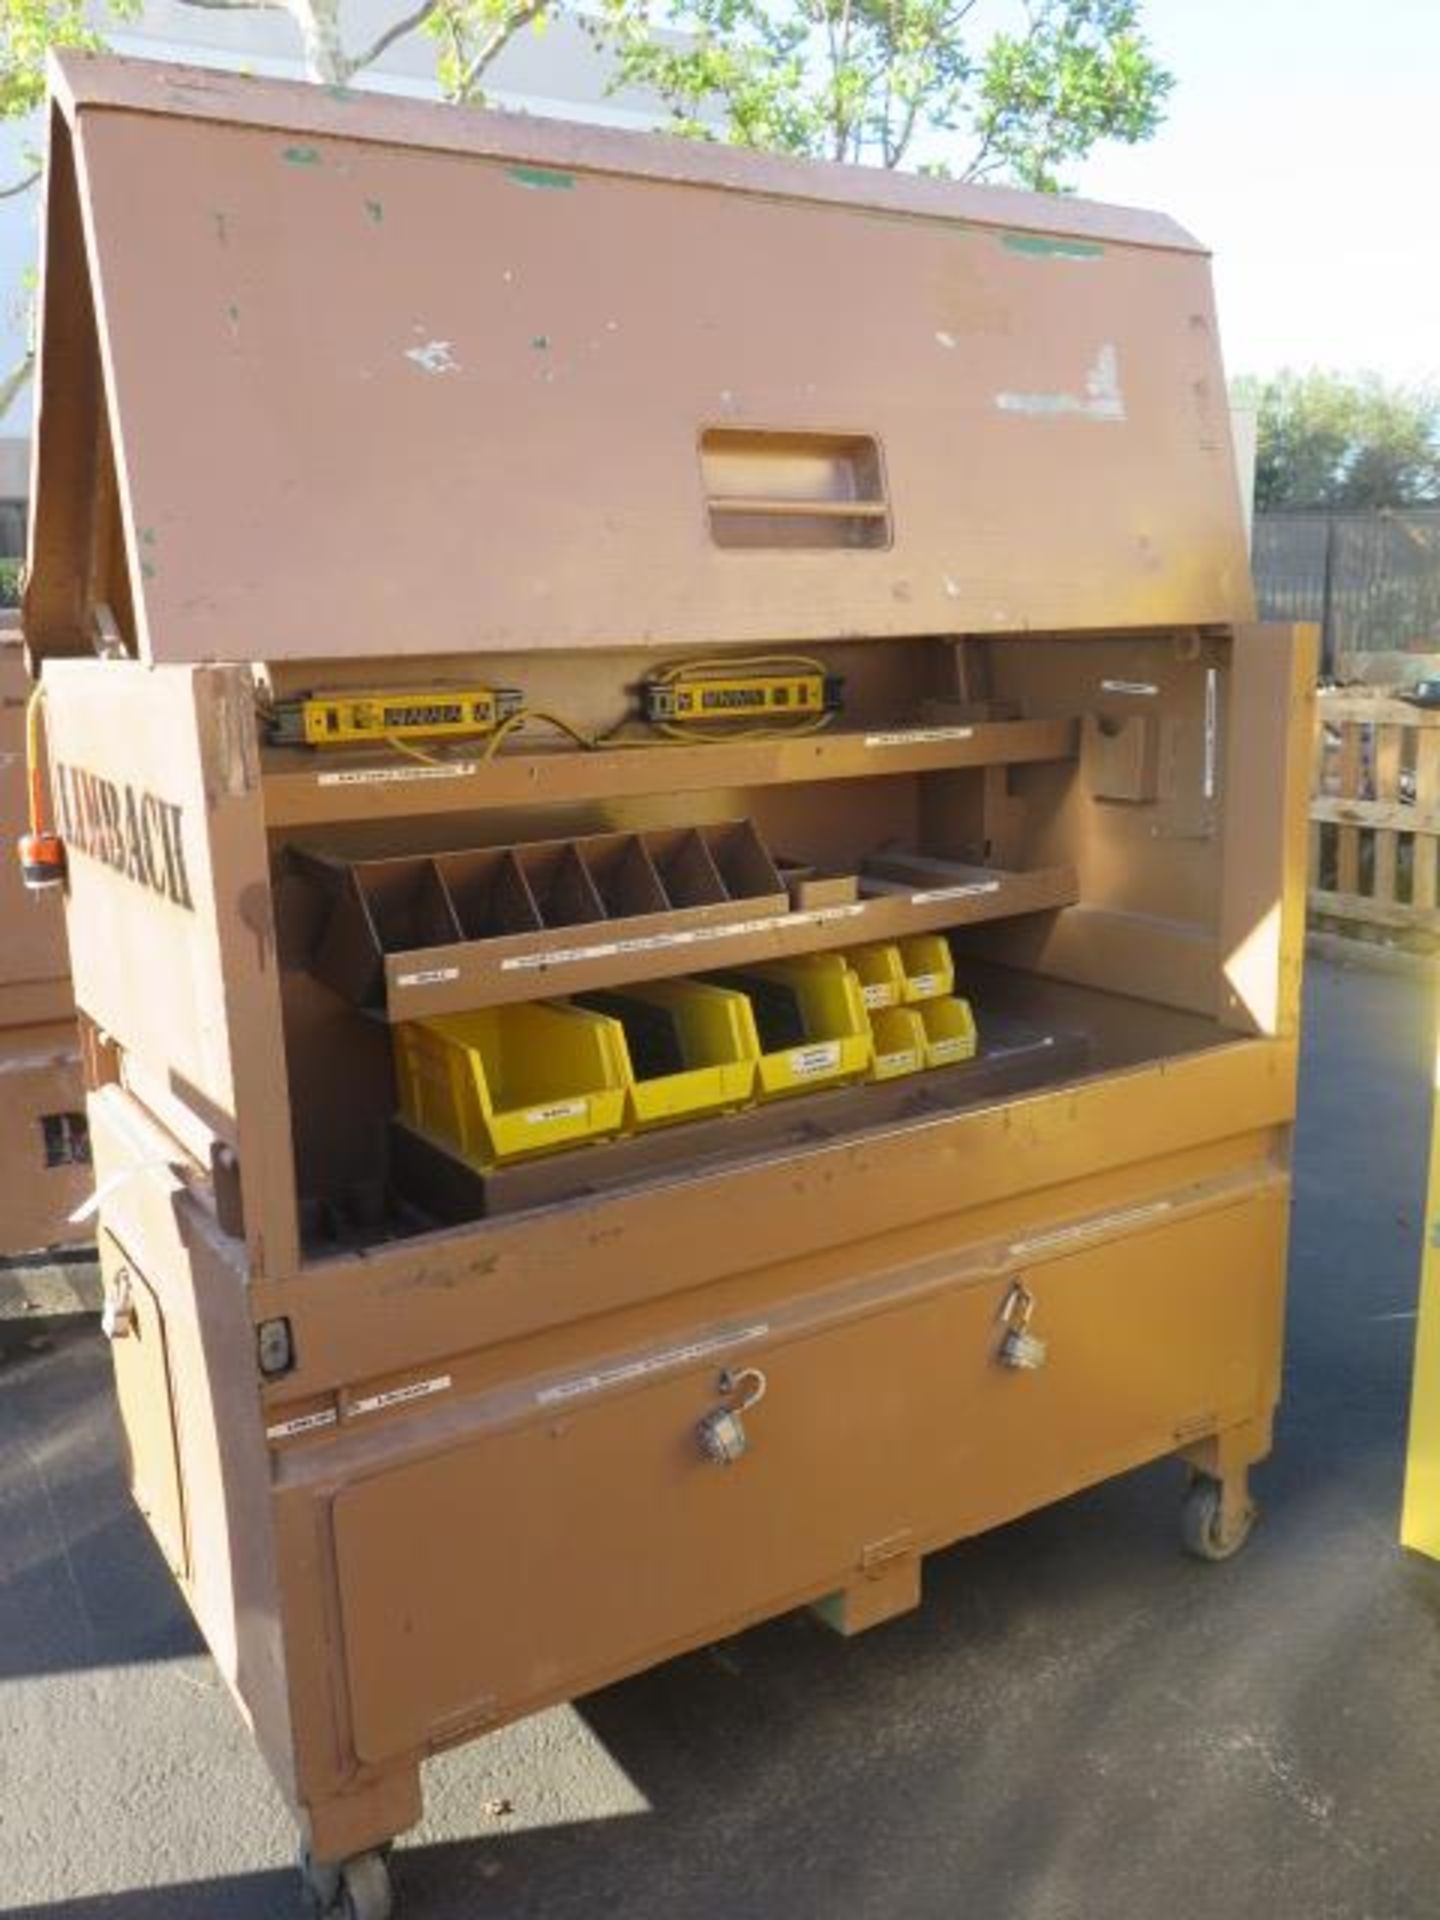 Knaack mdl. 89 Storagemaster Rolling Job Box (SOLD AS-IS - NO WARRANTY) - Image 3 of 9